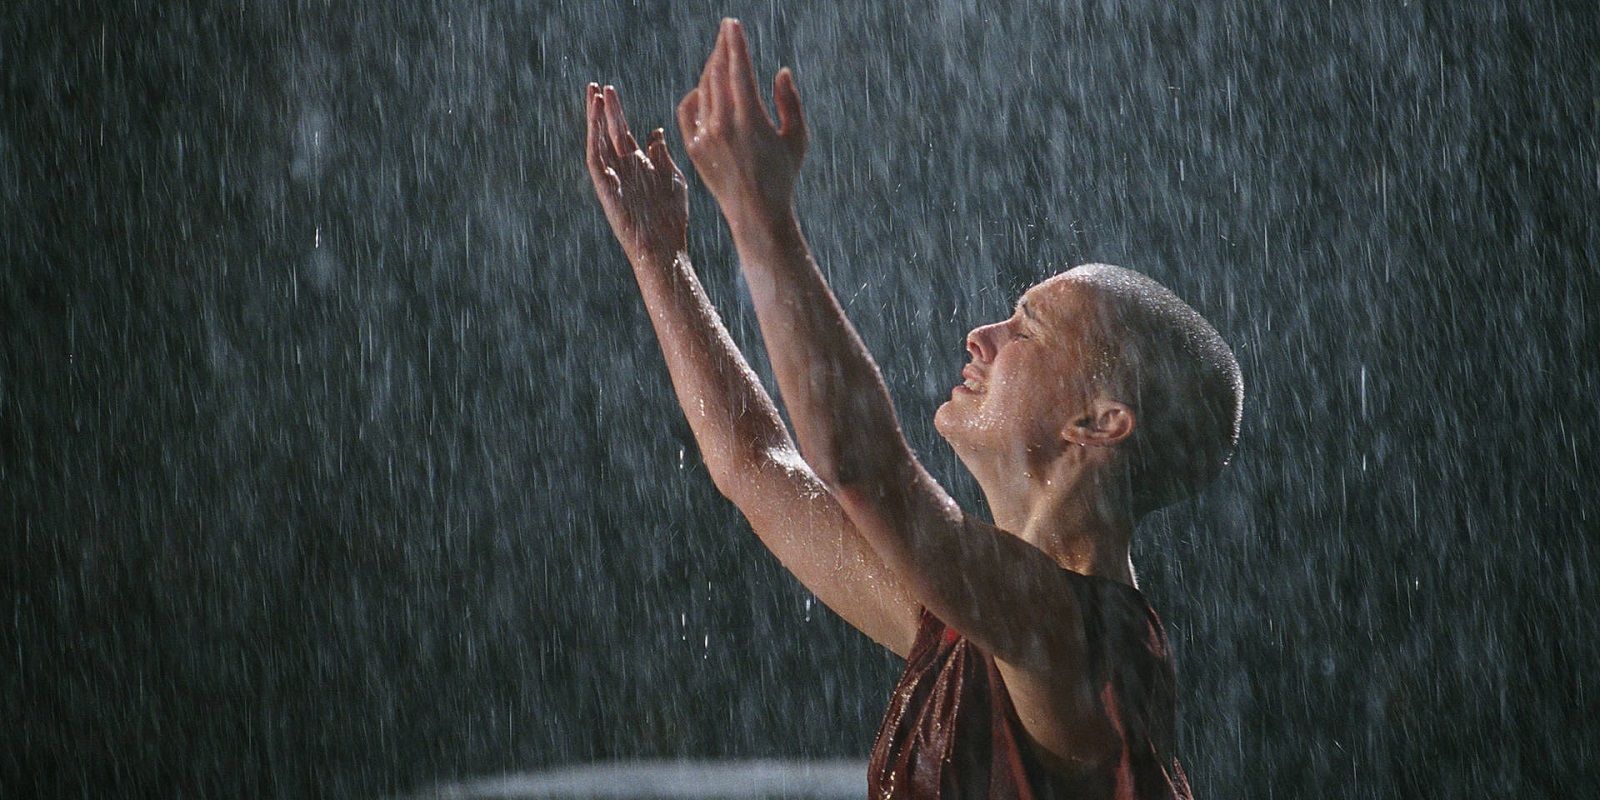 Natalia Portman cries in the rain in V For Vendetta